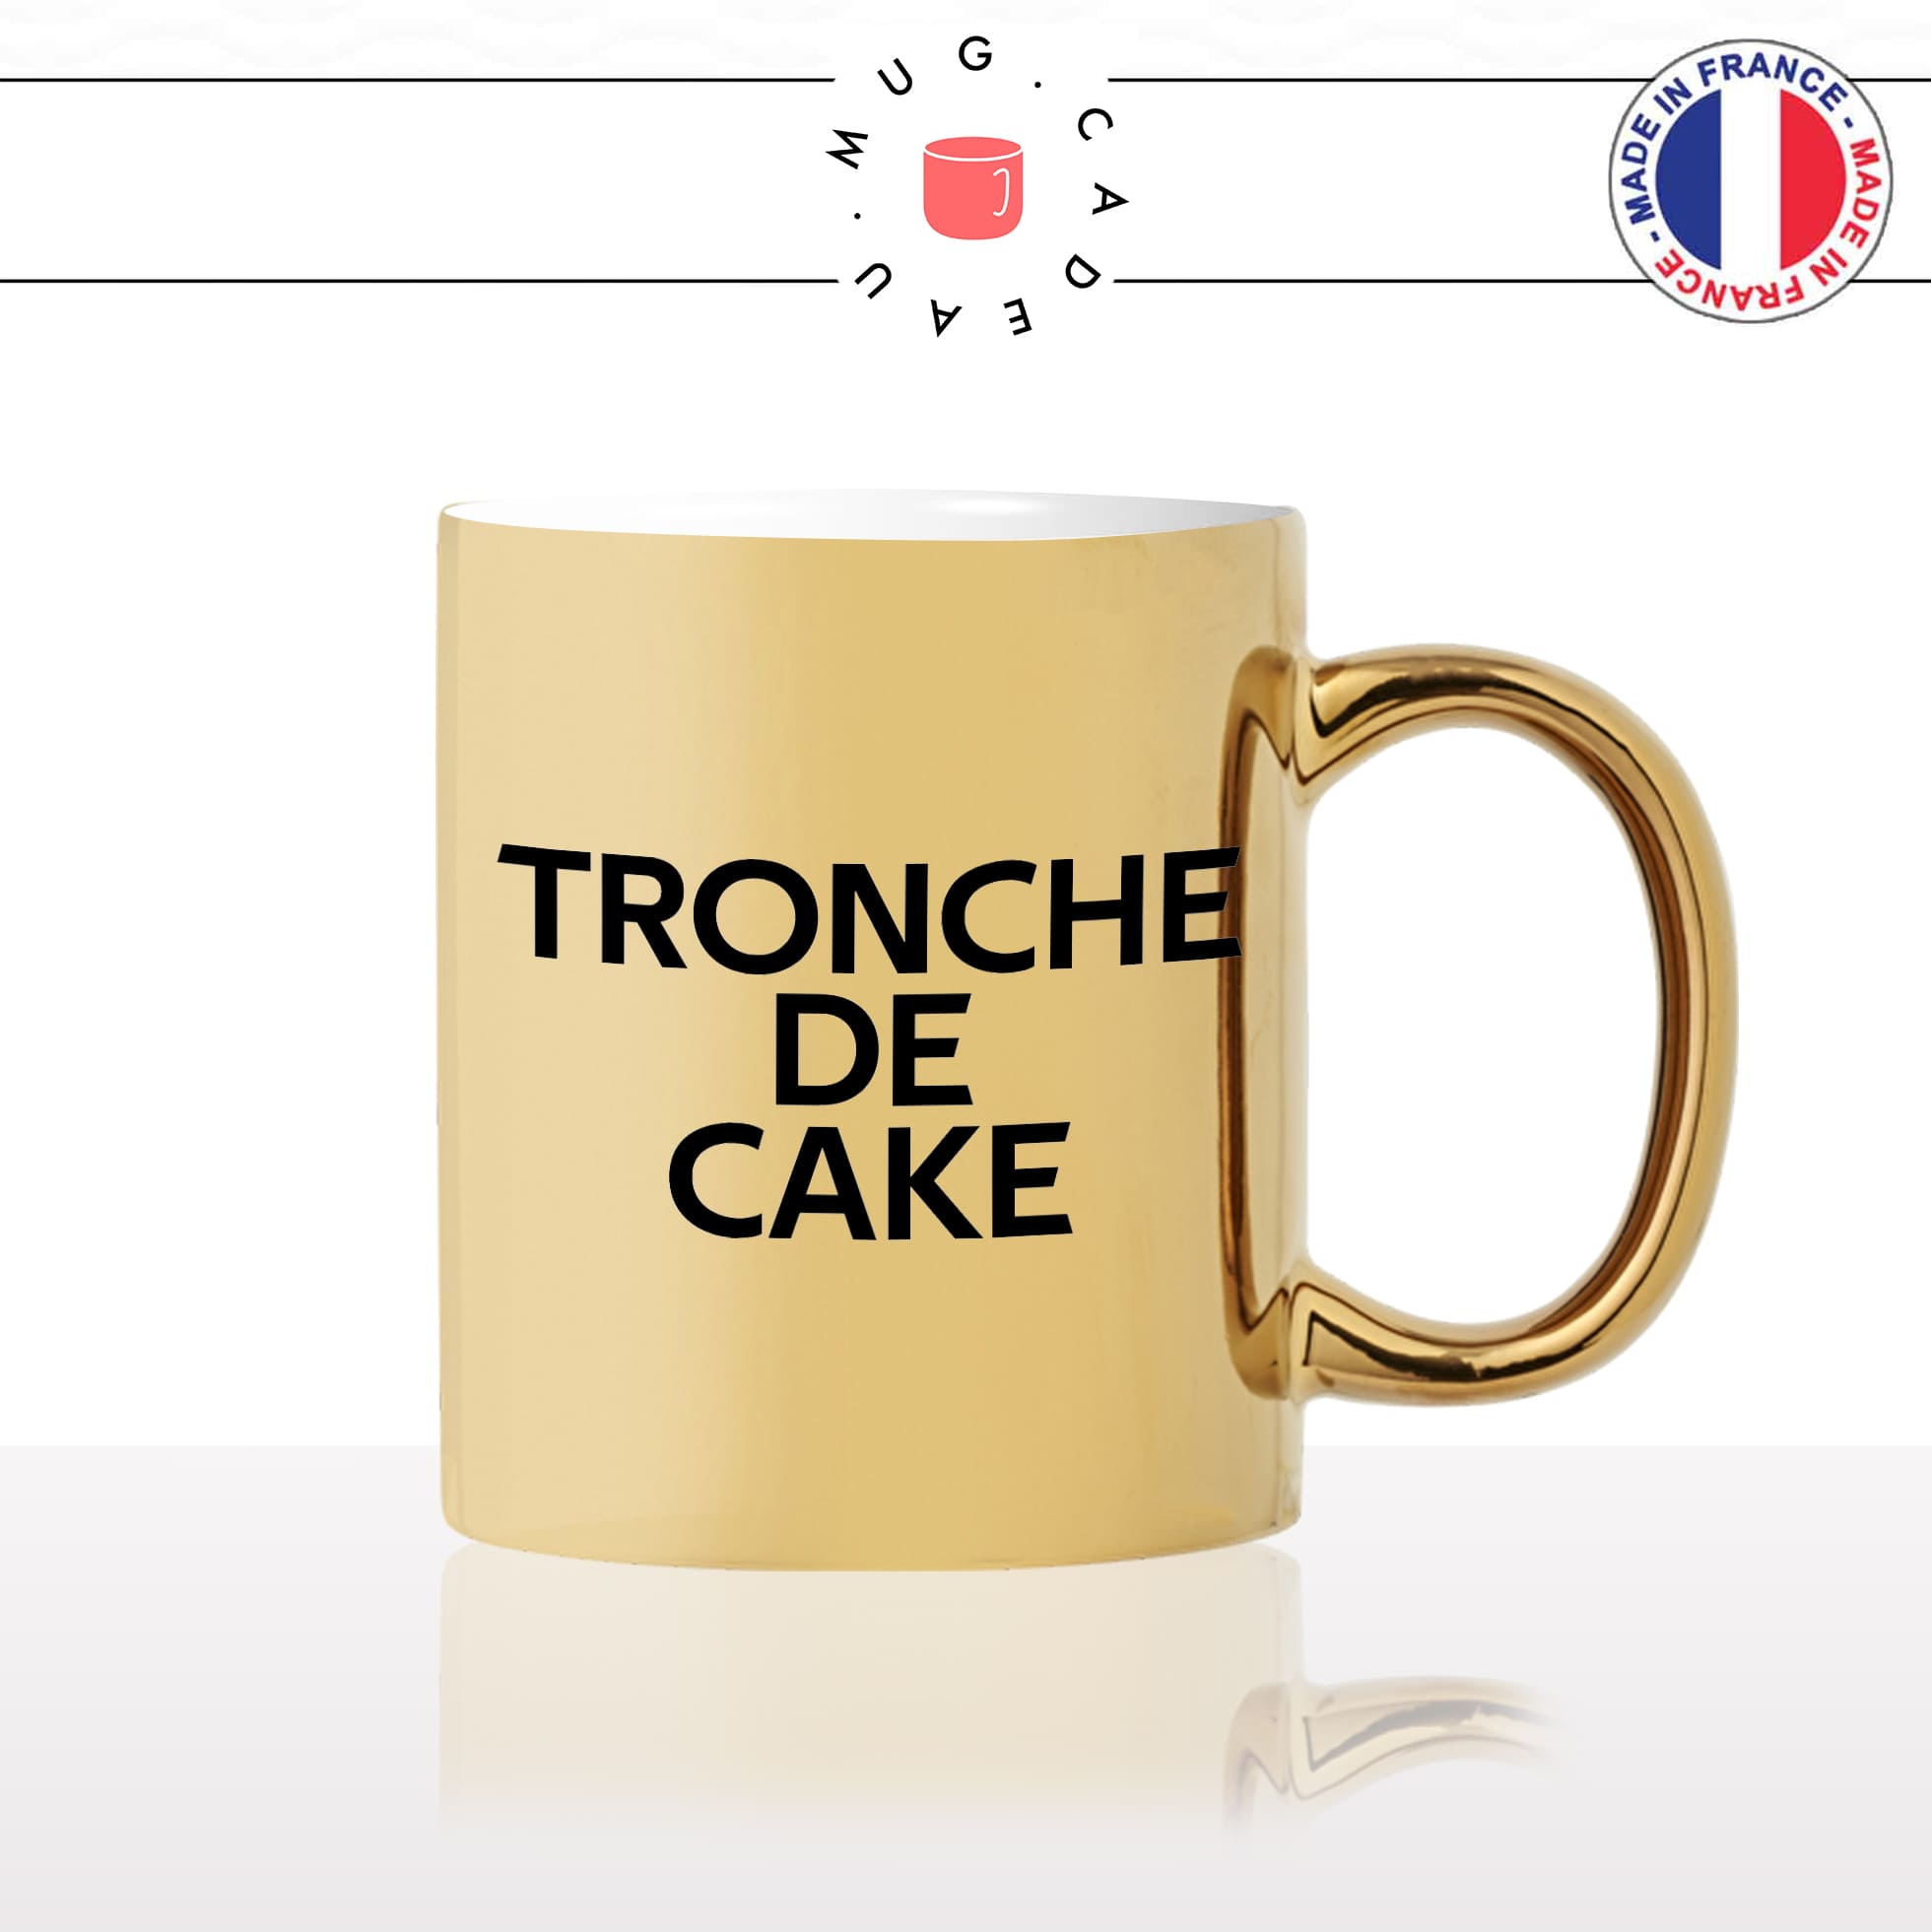 mug-tasse-or-doré-gold-tronche-de-cake-expression-francaise-anglais-gateau-tete-de-cul-humour-fun-idée-cadeau-originale-cool2